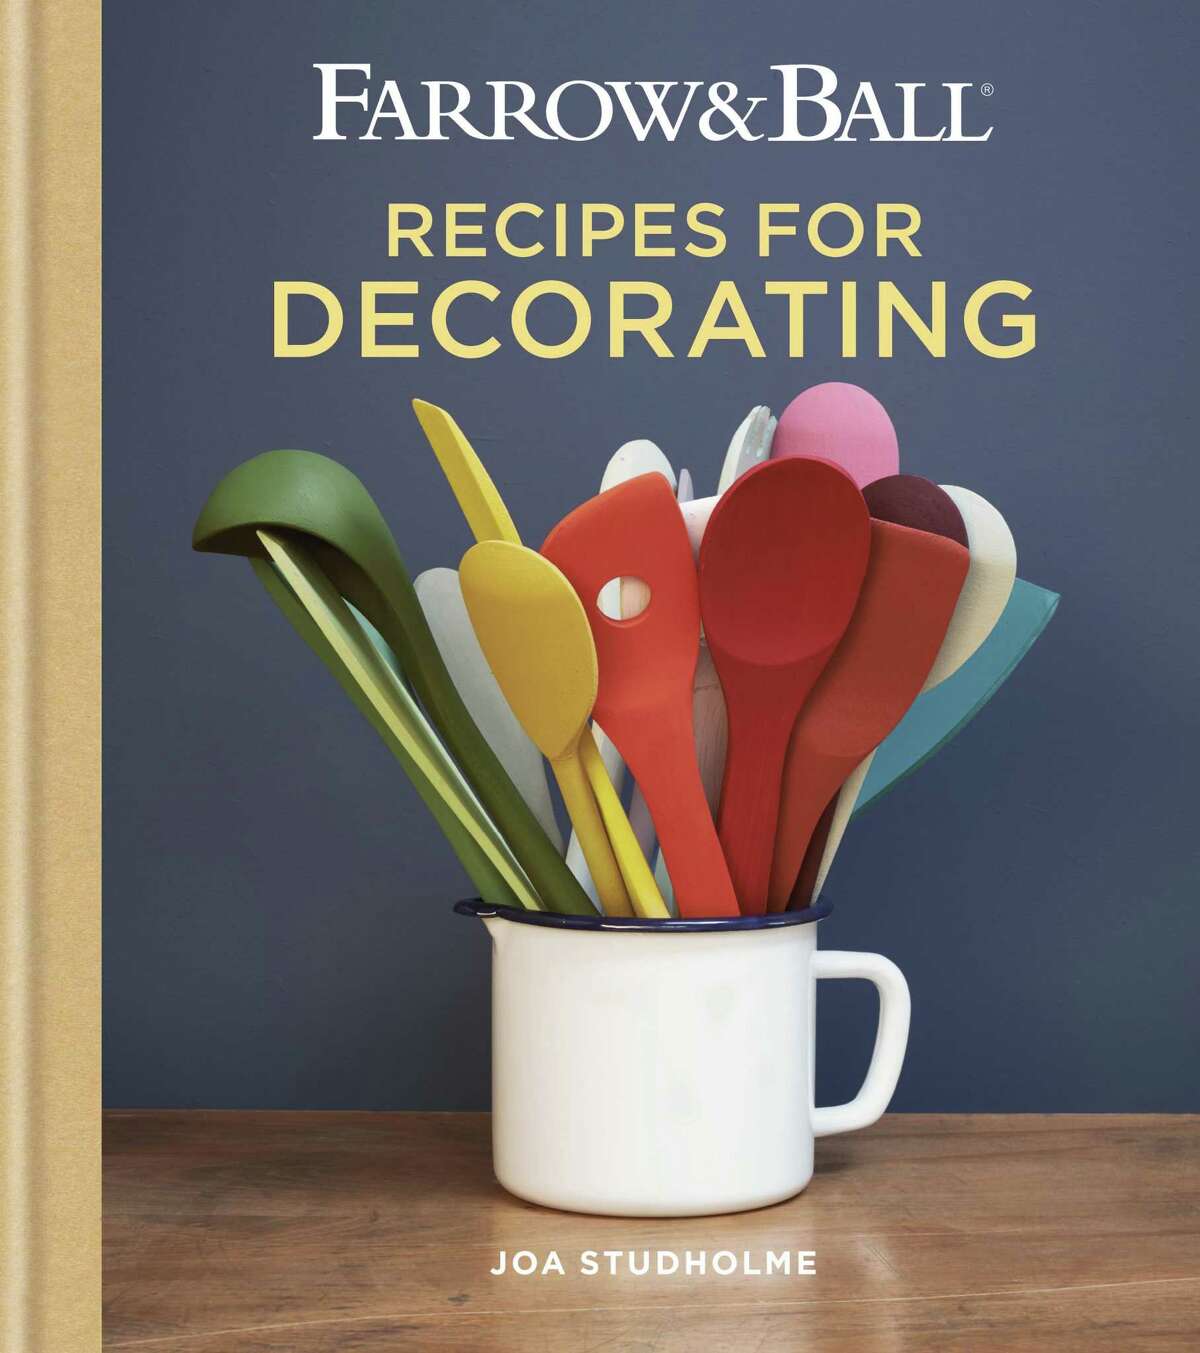 "Farrow & Ball: Recipes for Decorating," by Joa Studholme